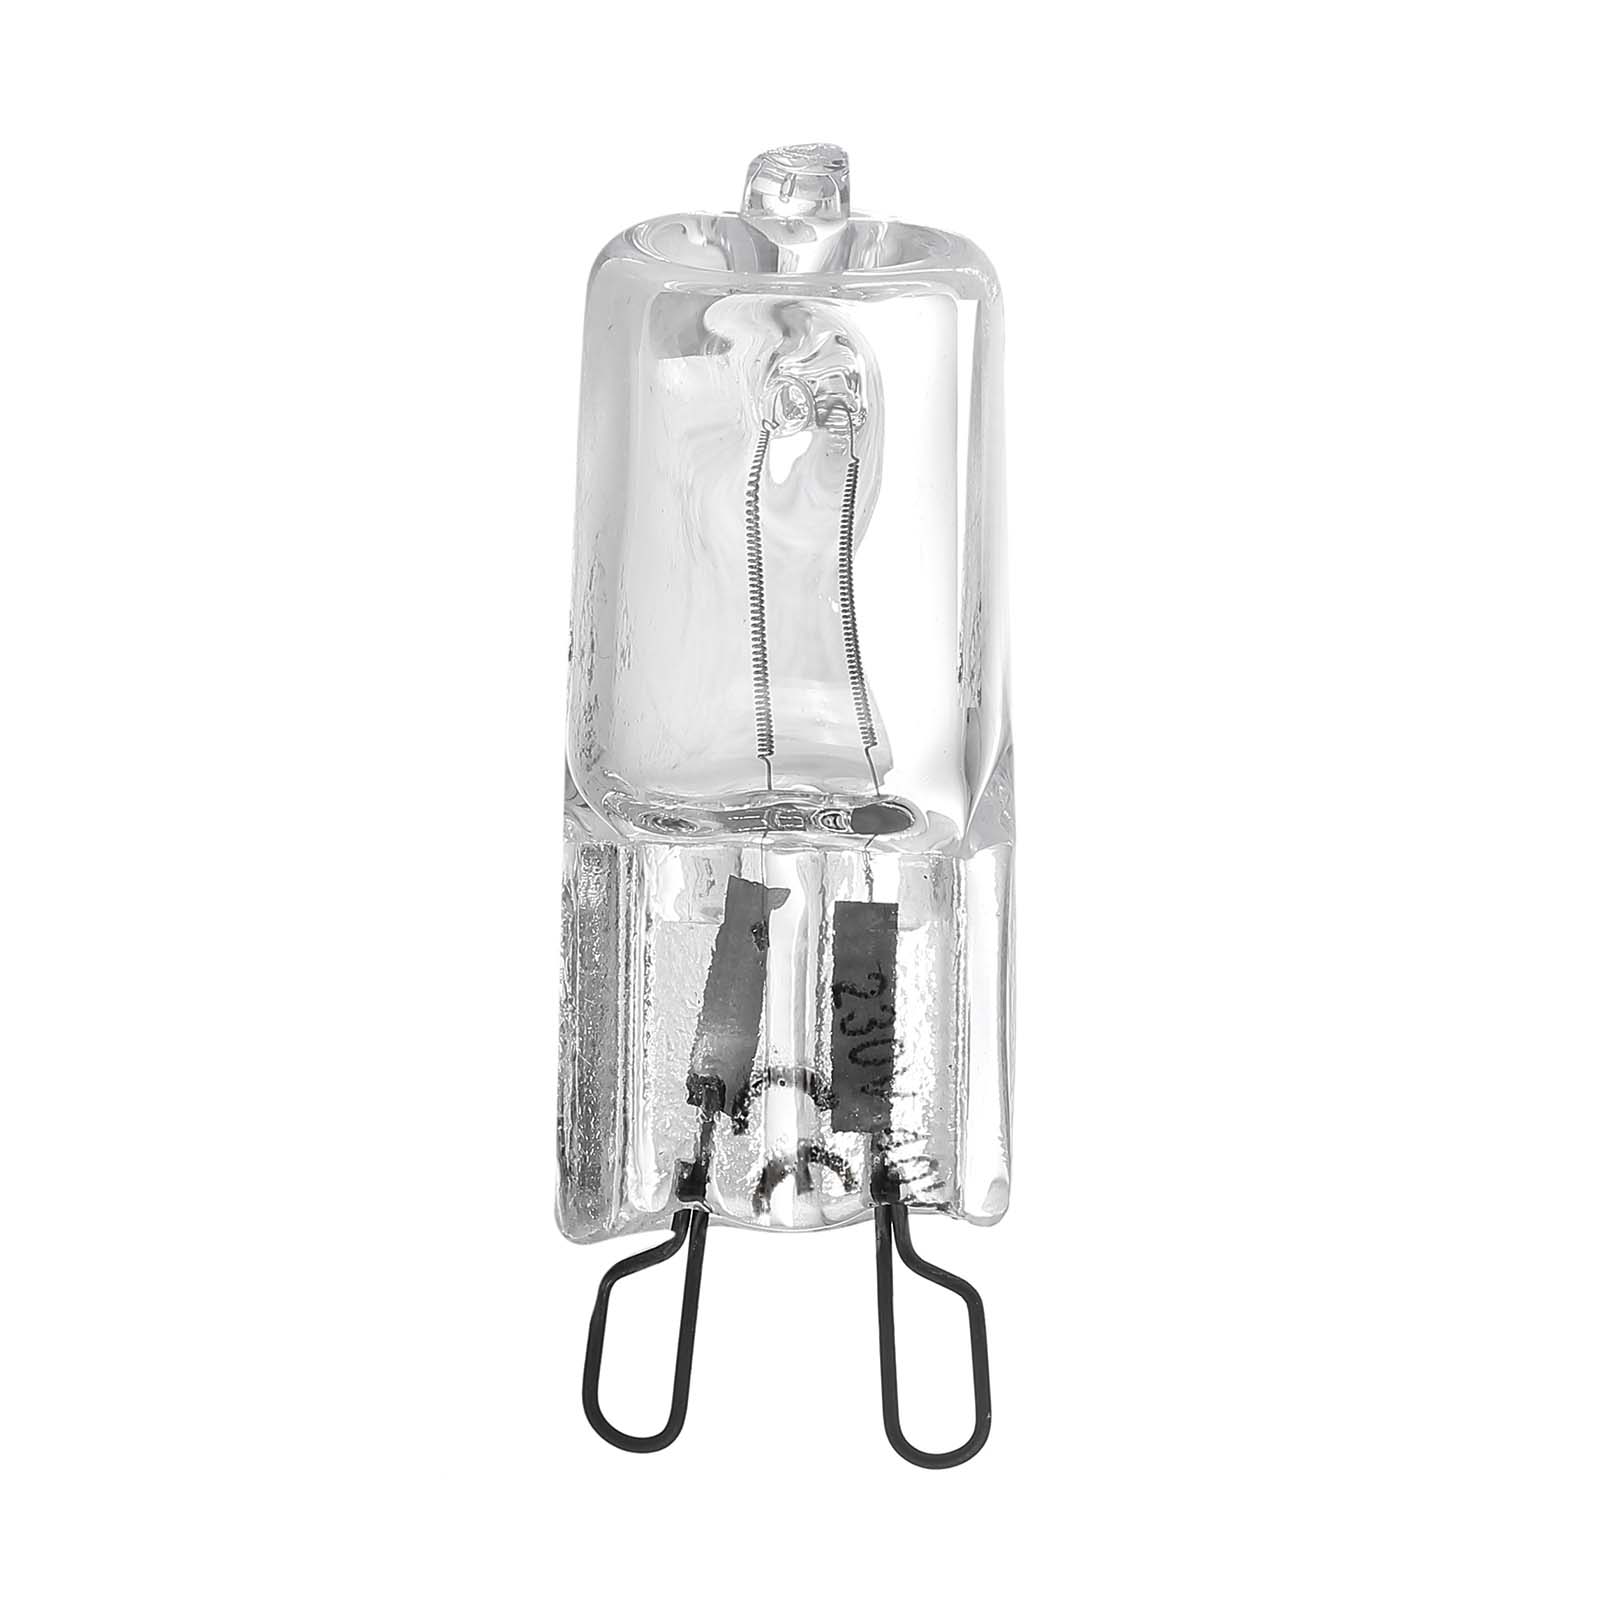 Belling Cooker Oven Halogen Lamp Bulb - G9 - 40W 082641655